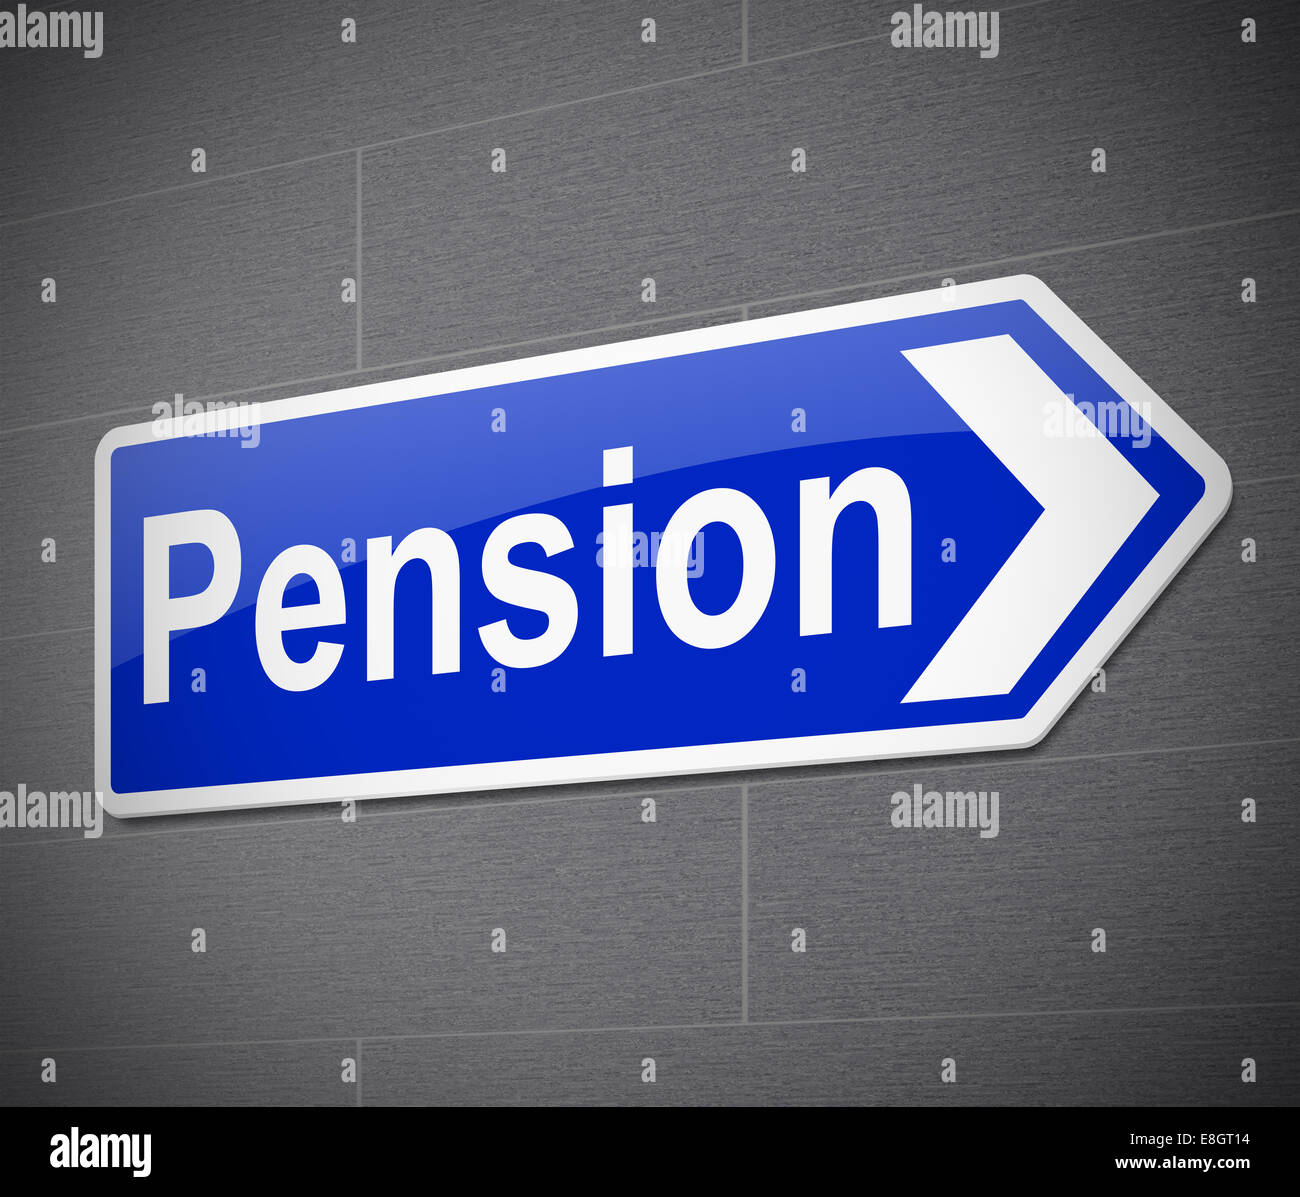 Pension concept. Stock Photo